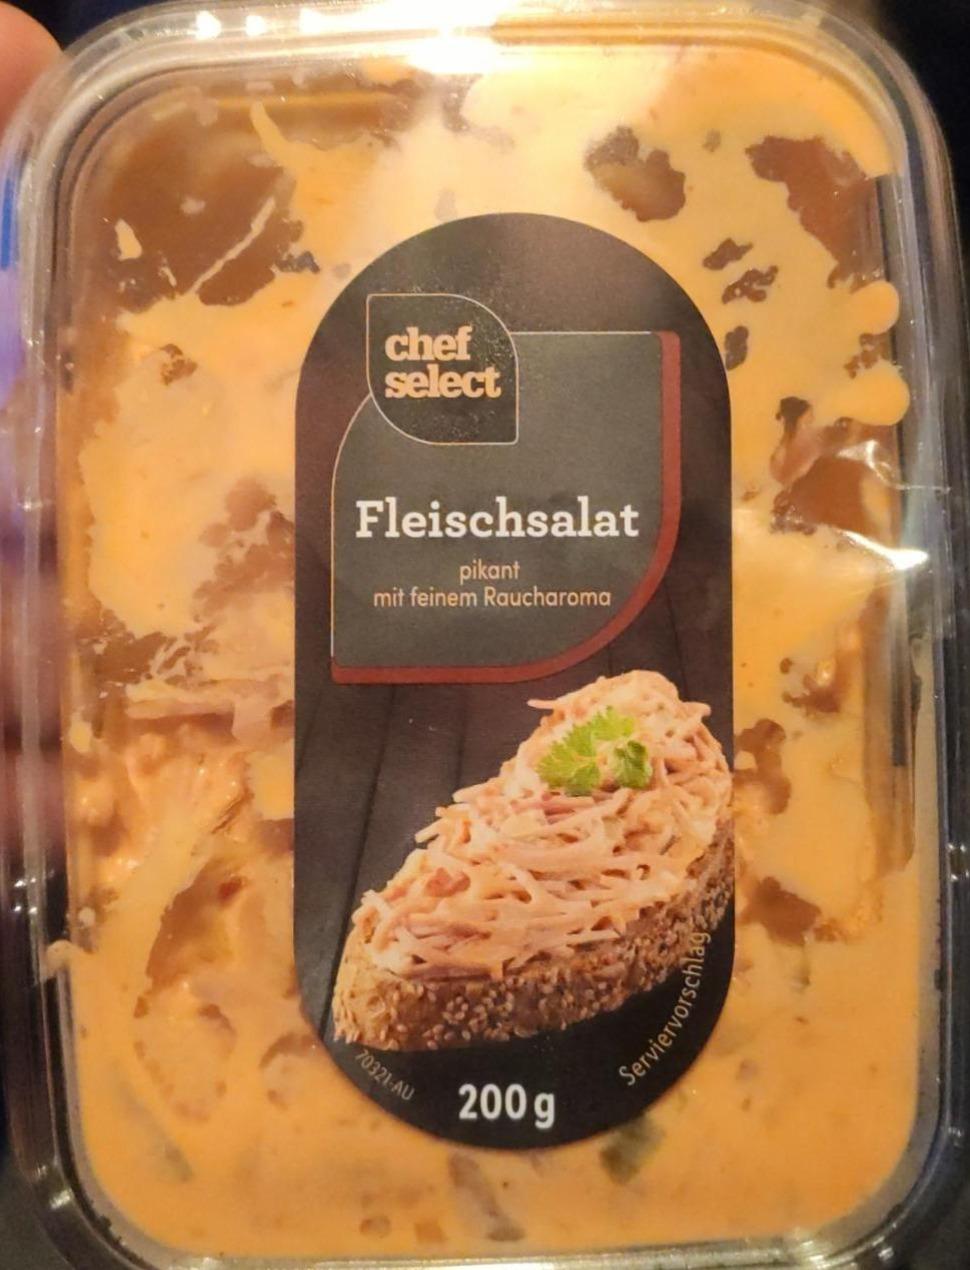 Raucharoma Chef kalorie, - pikant a mit feinem Select nutriční hodnoty kJ Fleischsalat